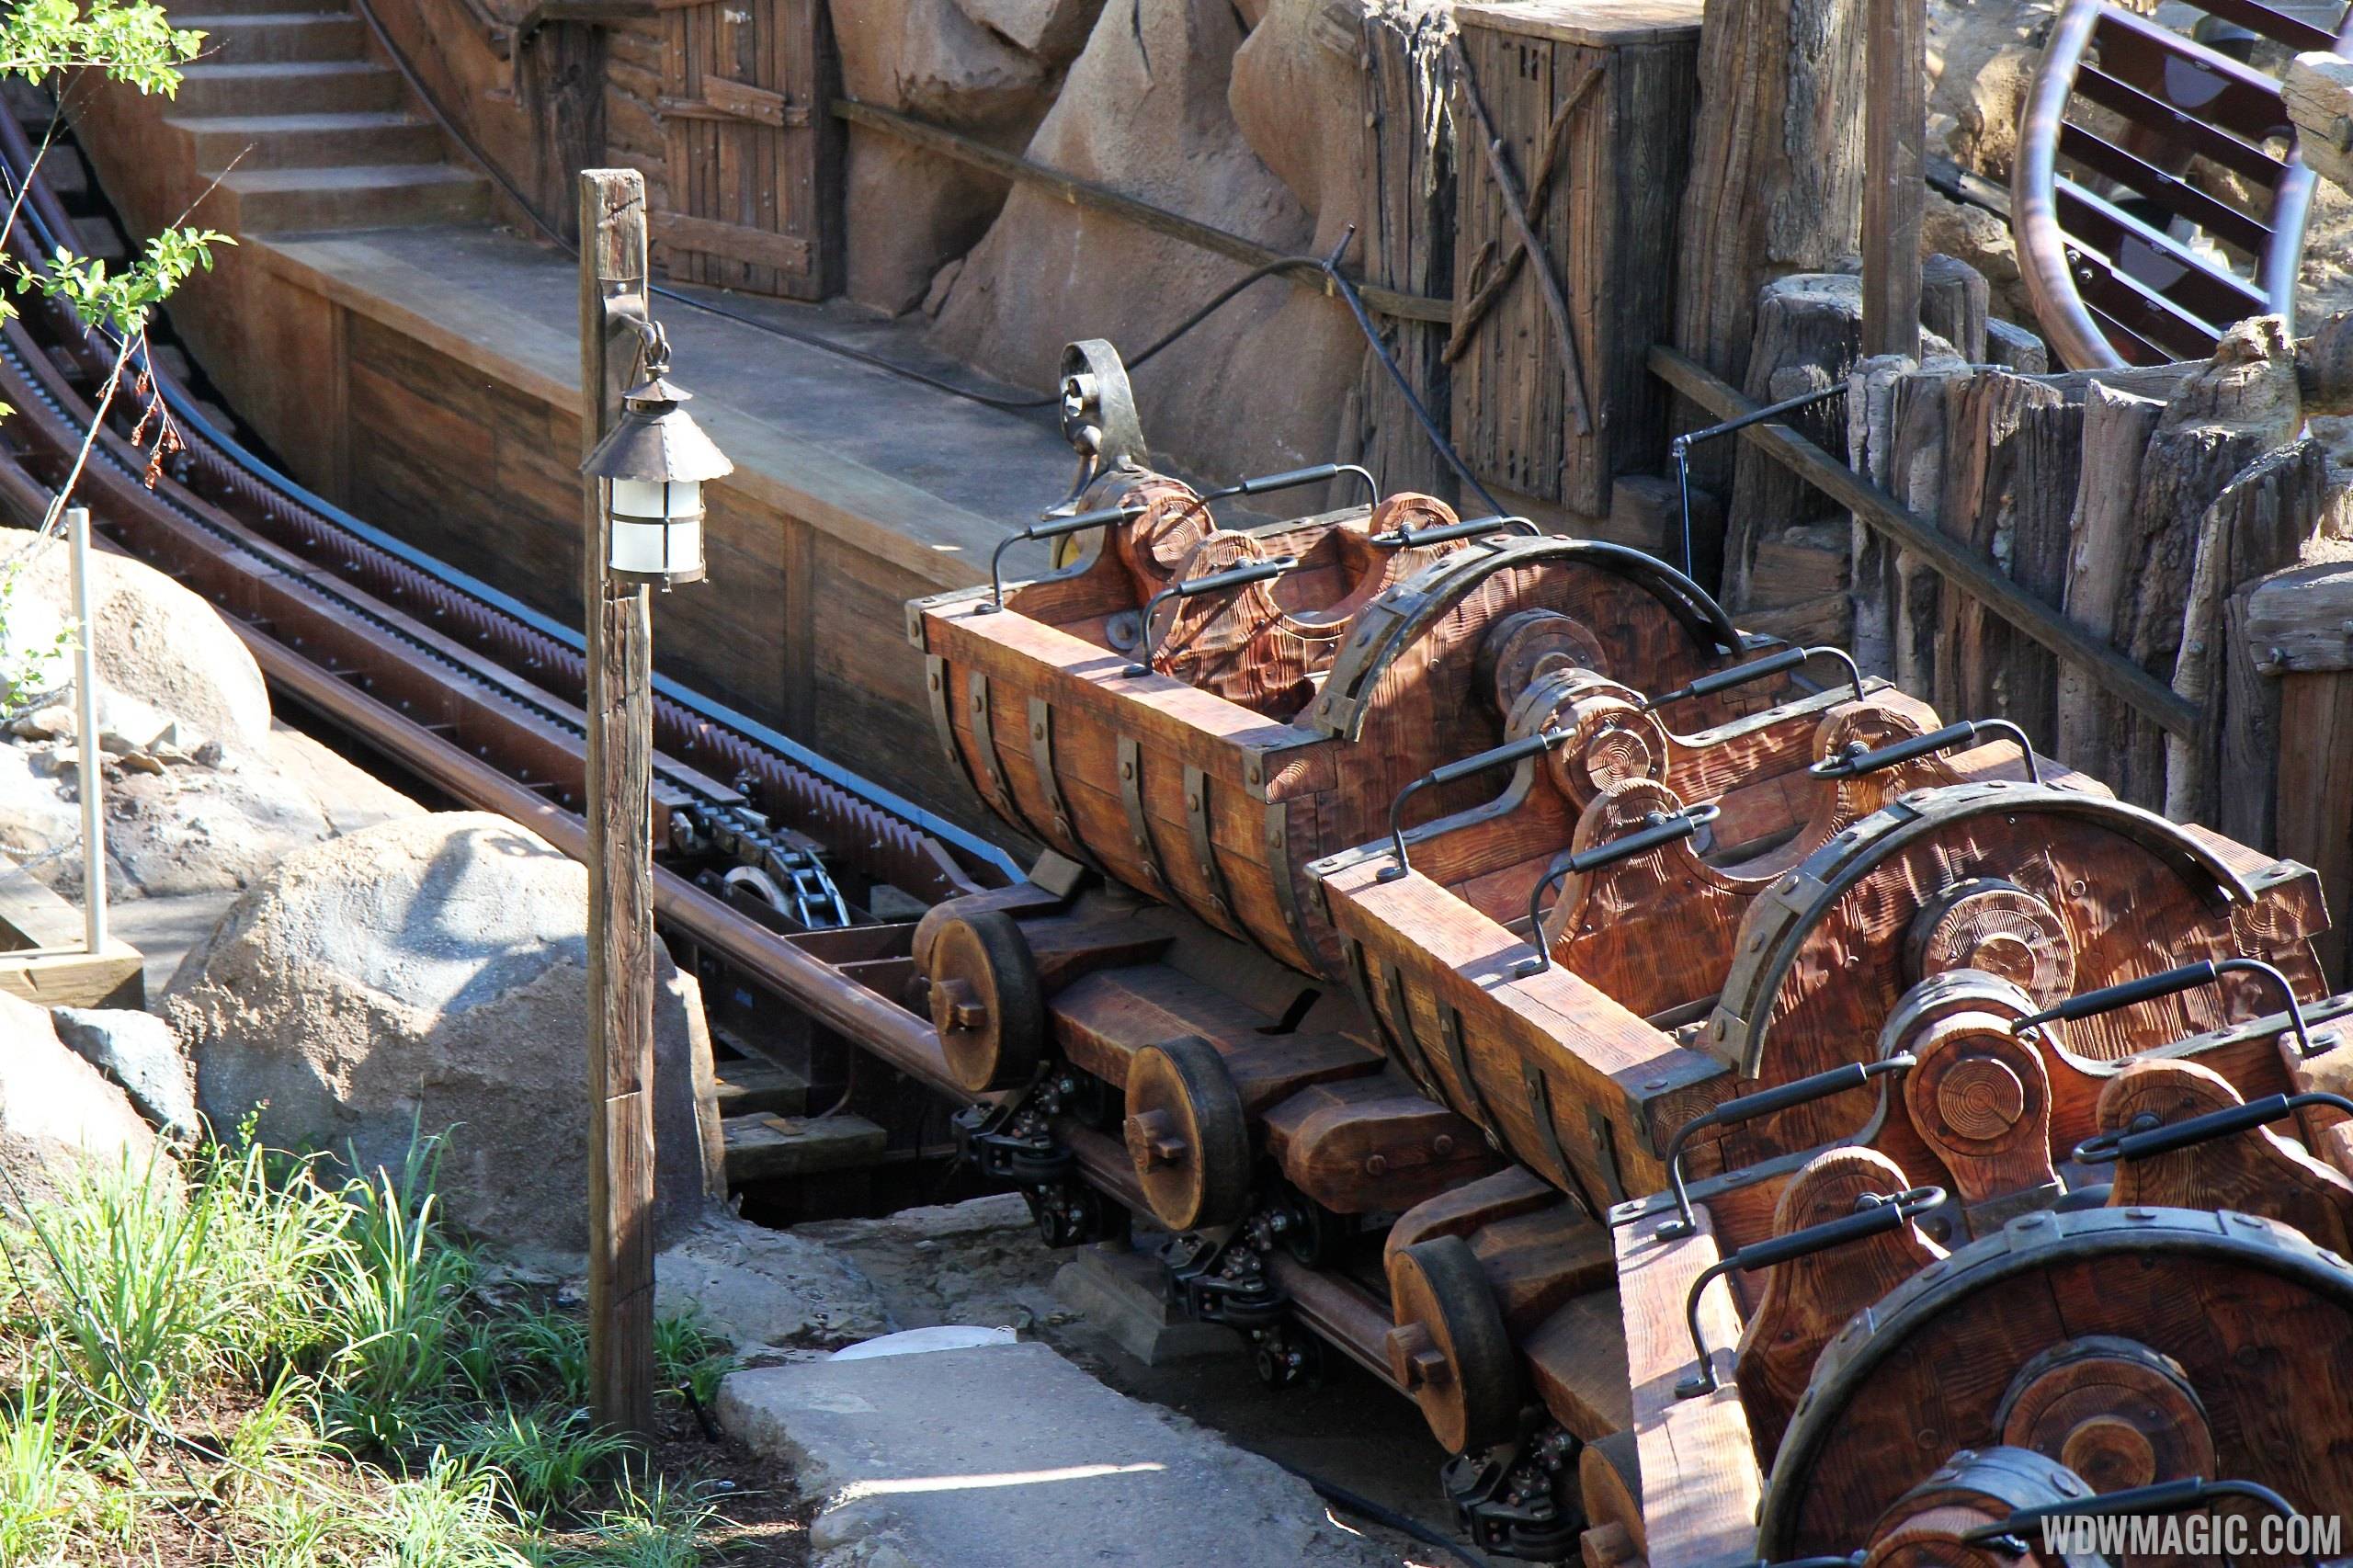 Seven Dwarfs Mine Train commercial filming